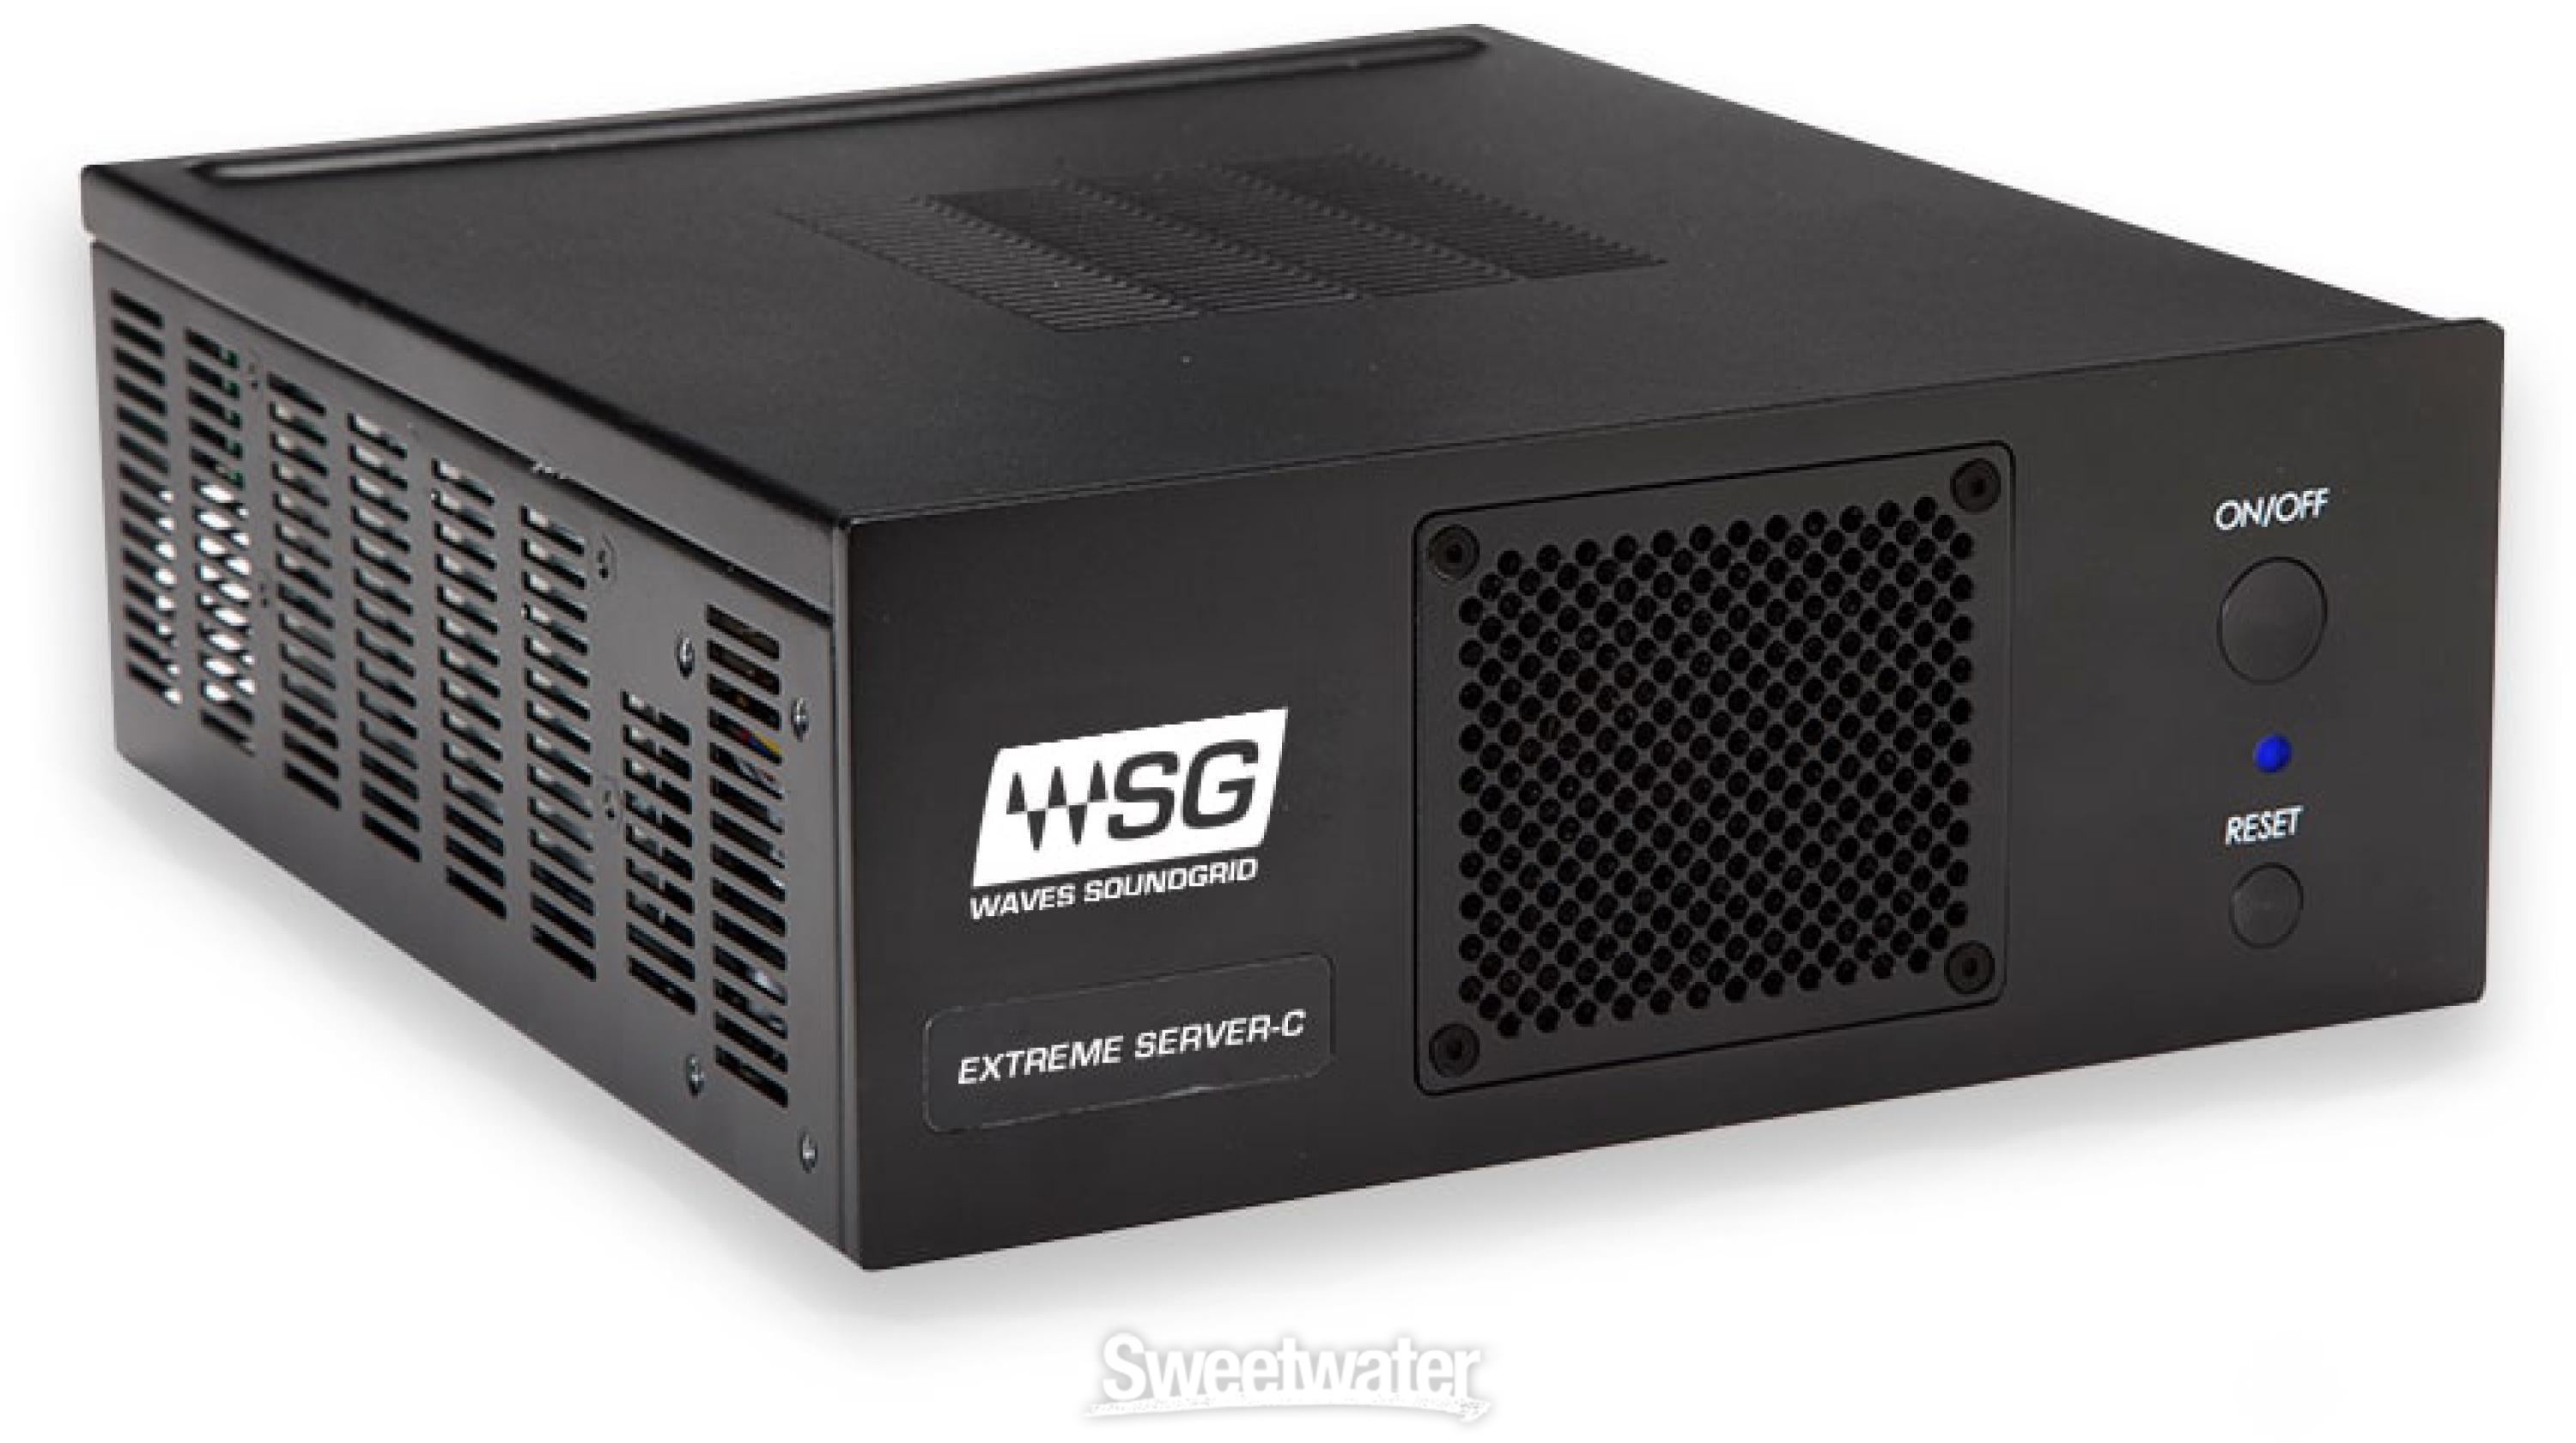 Waves SoundGrid Extreme Server-C DSP Server Reviews | Sweetwater